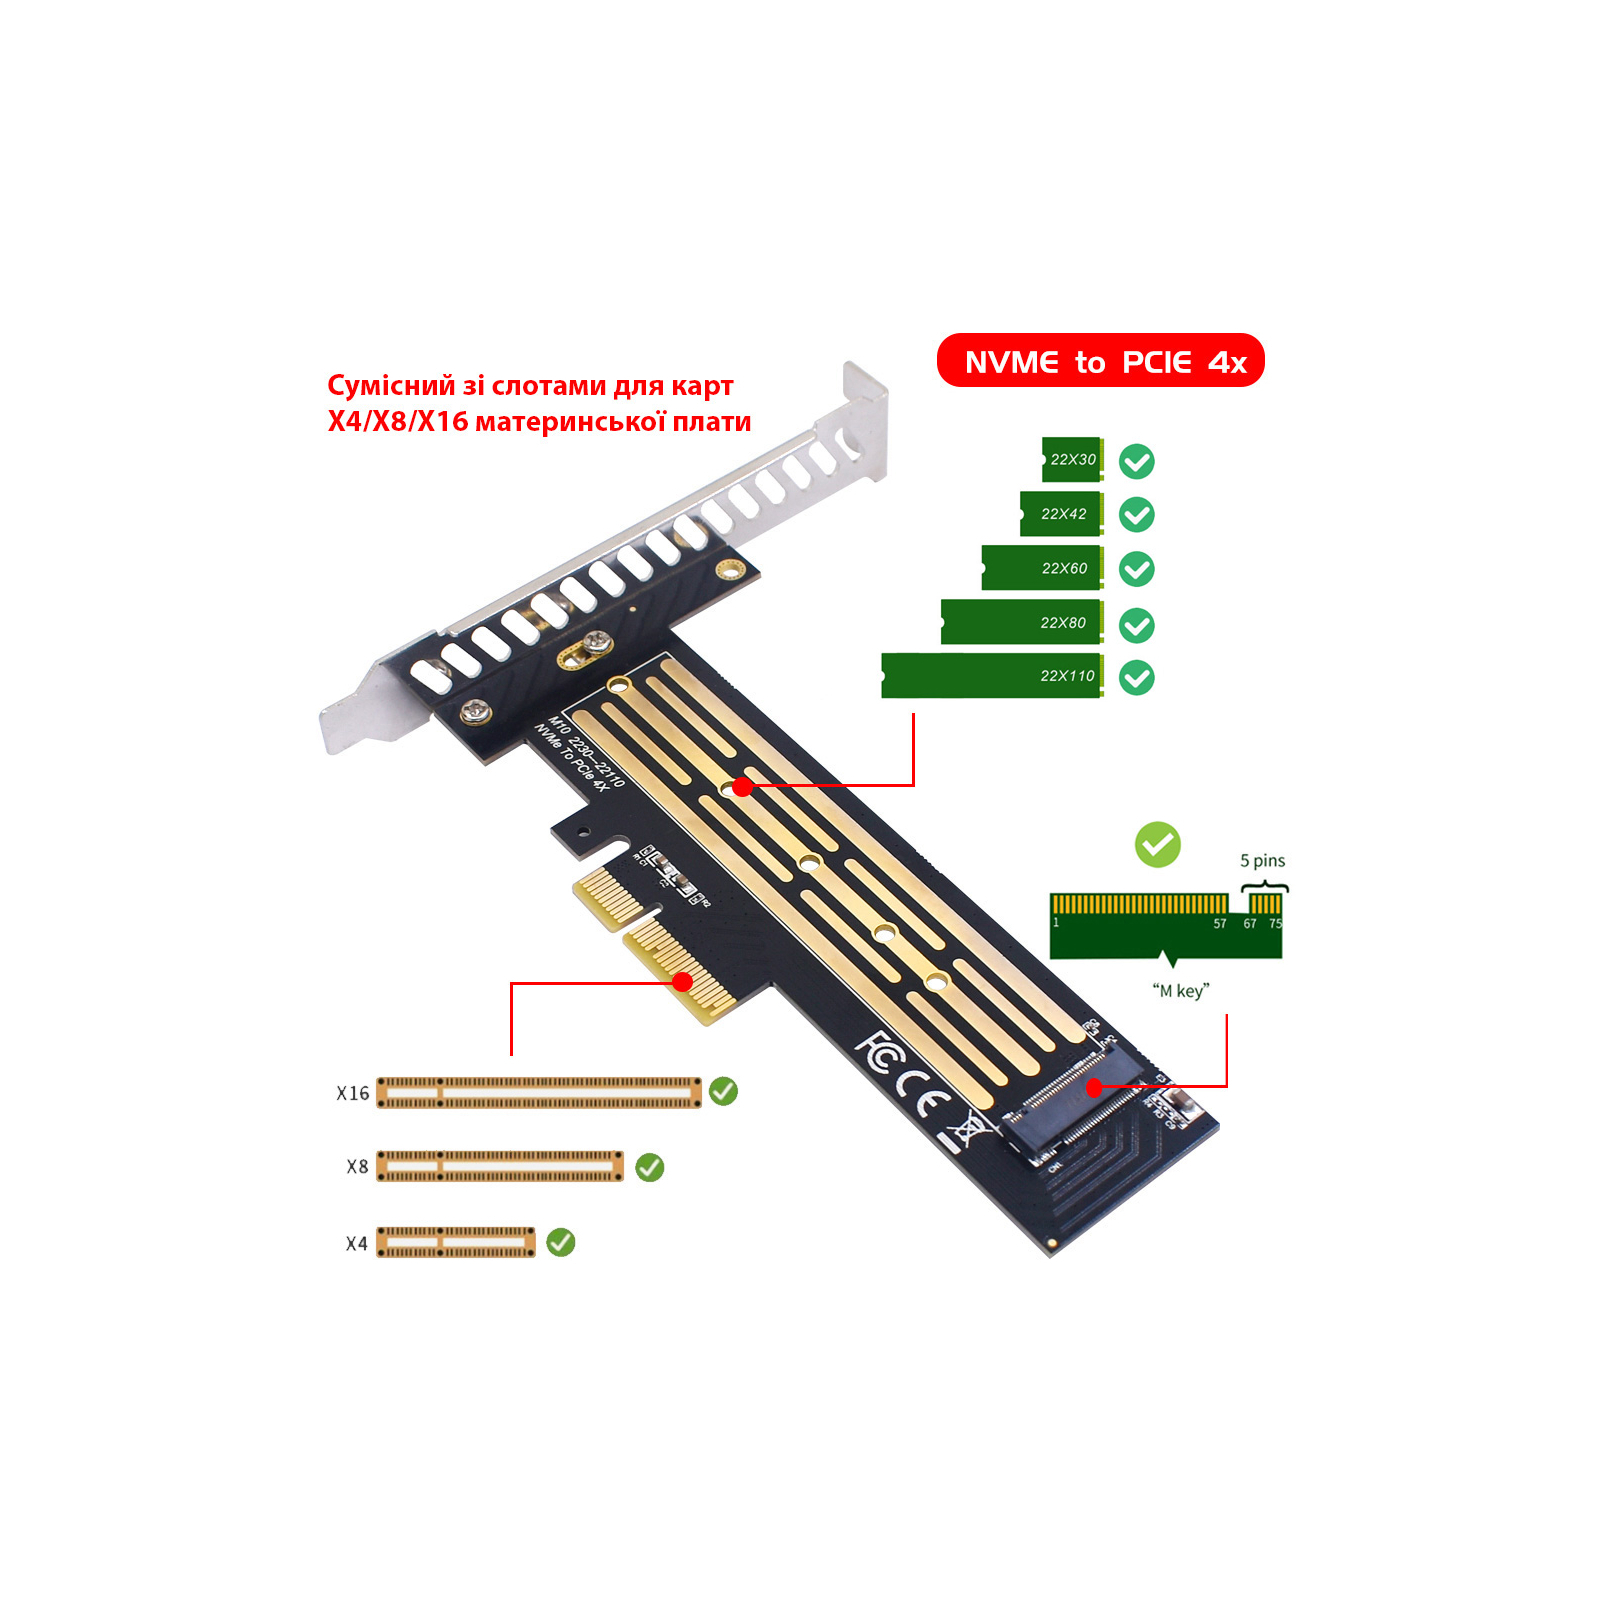 Контроллер Dynamode M.2 SSD NVMe M-Key to PCI-E 3.0 x4/ x8/ x16, full profile br (PCI-Ex4- M.2 M-key) изображение 6